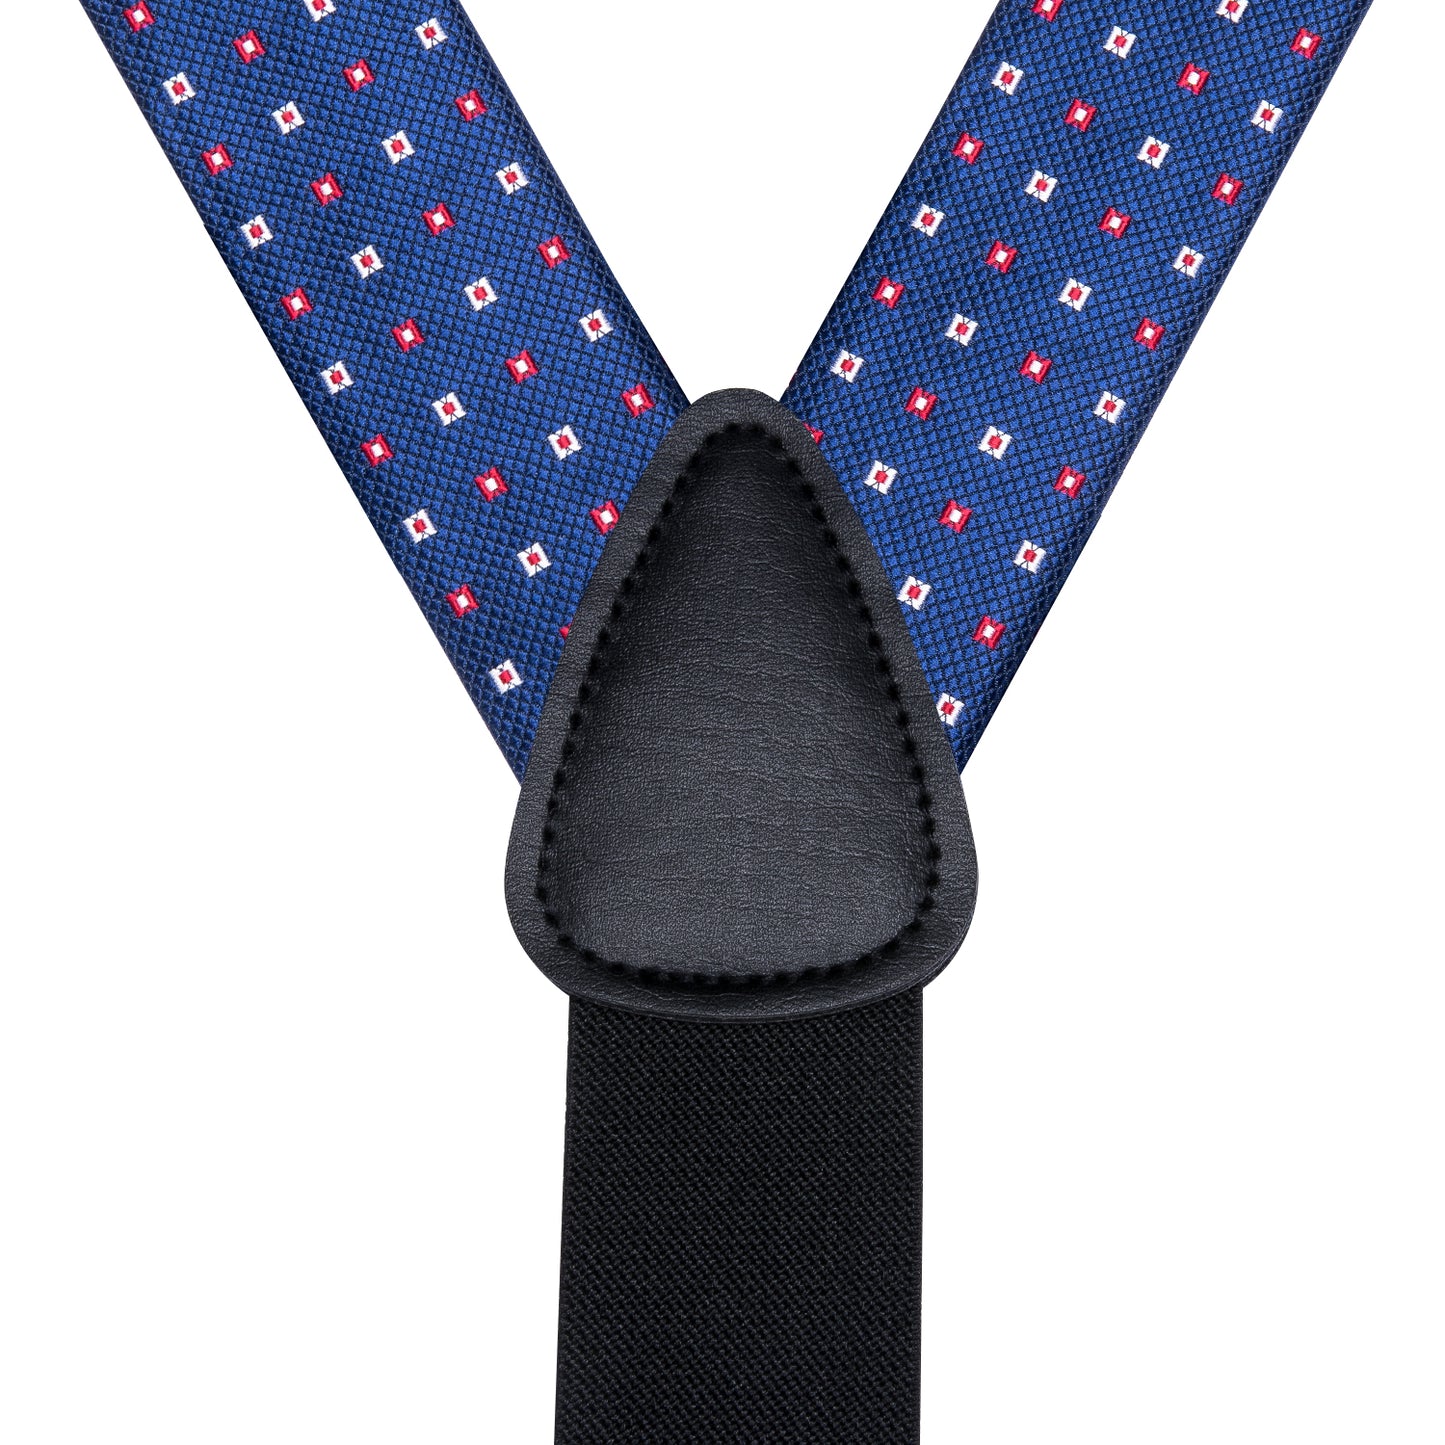 BD3006 Men's Braces Designer Clip Suspender Set [Blue Dots]